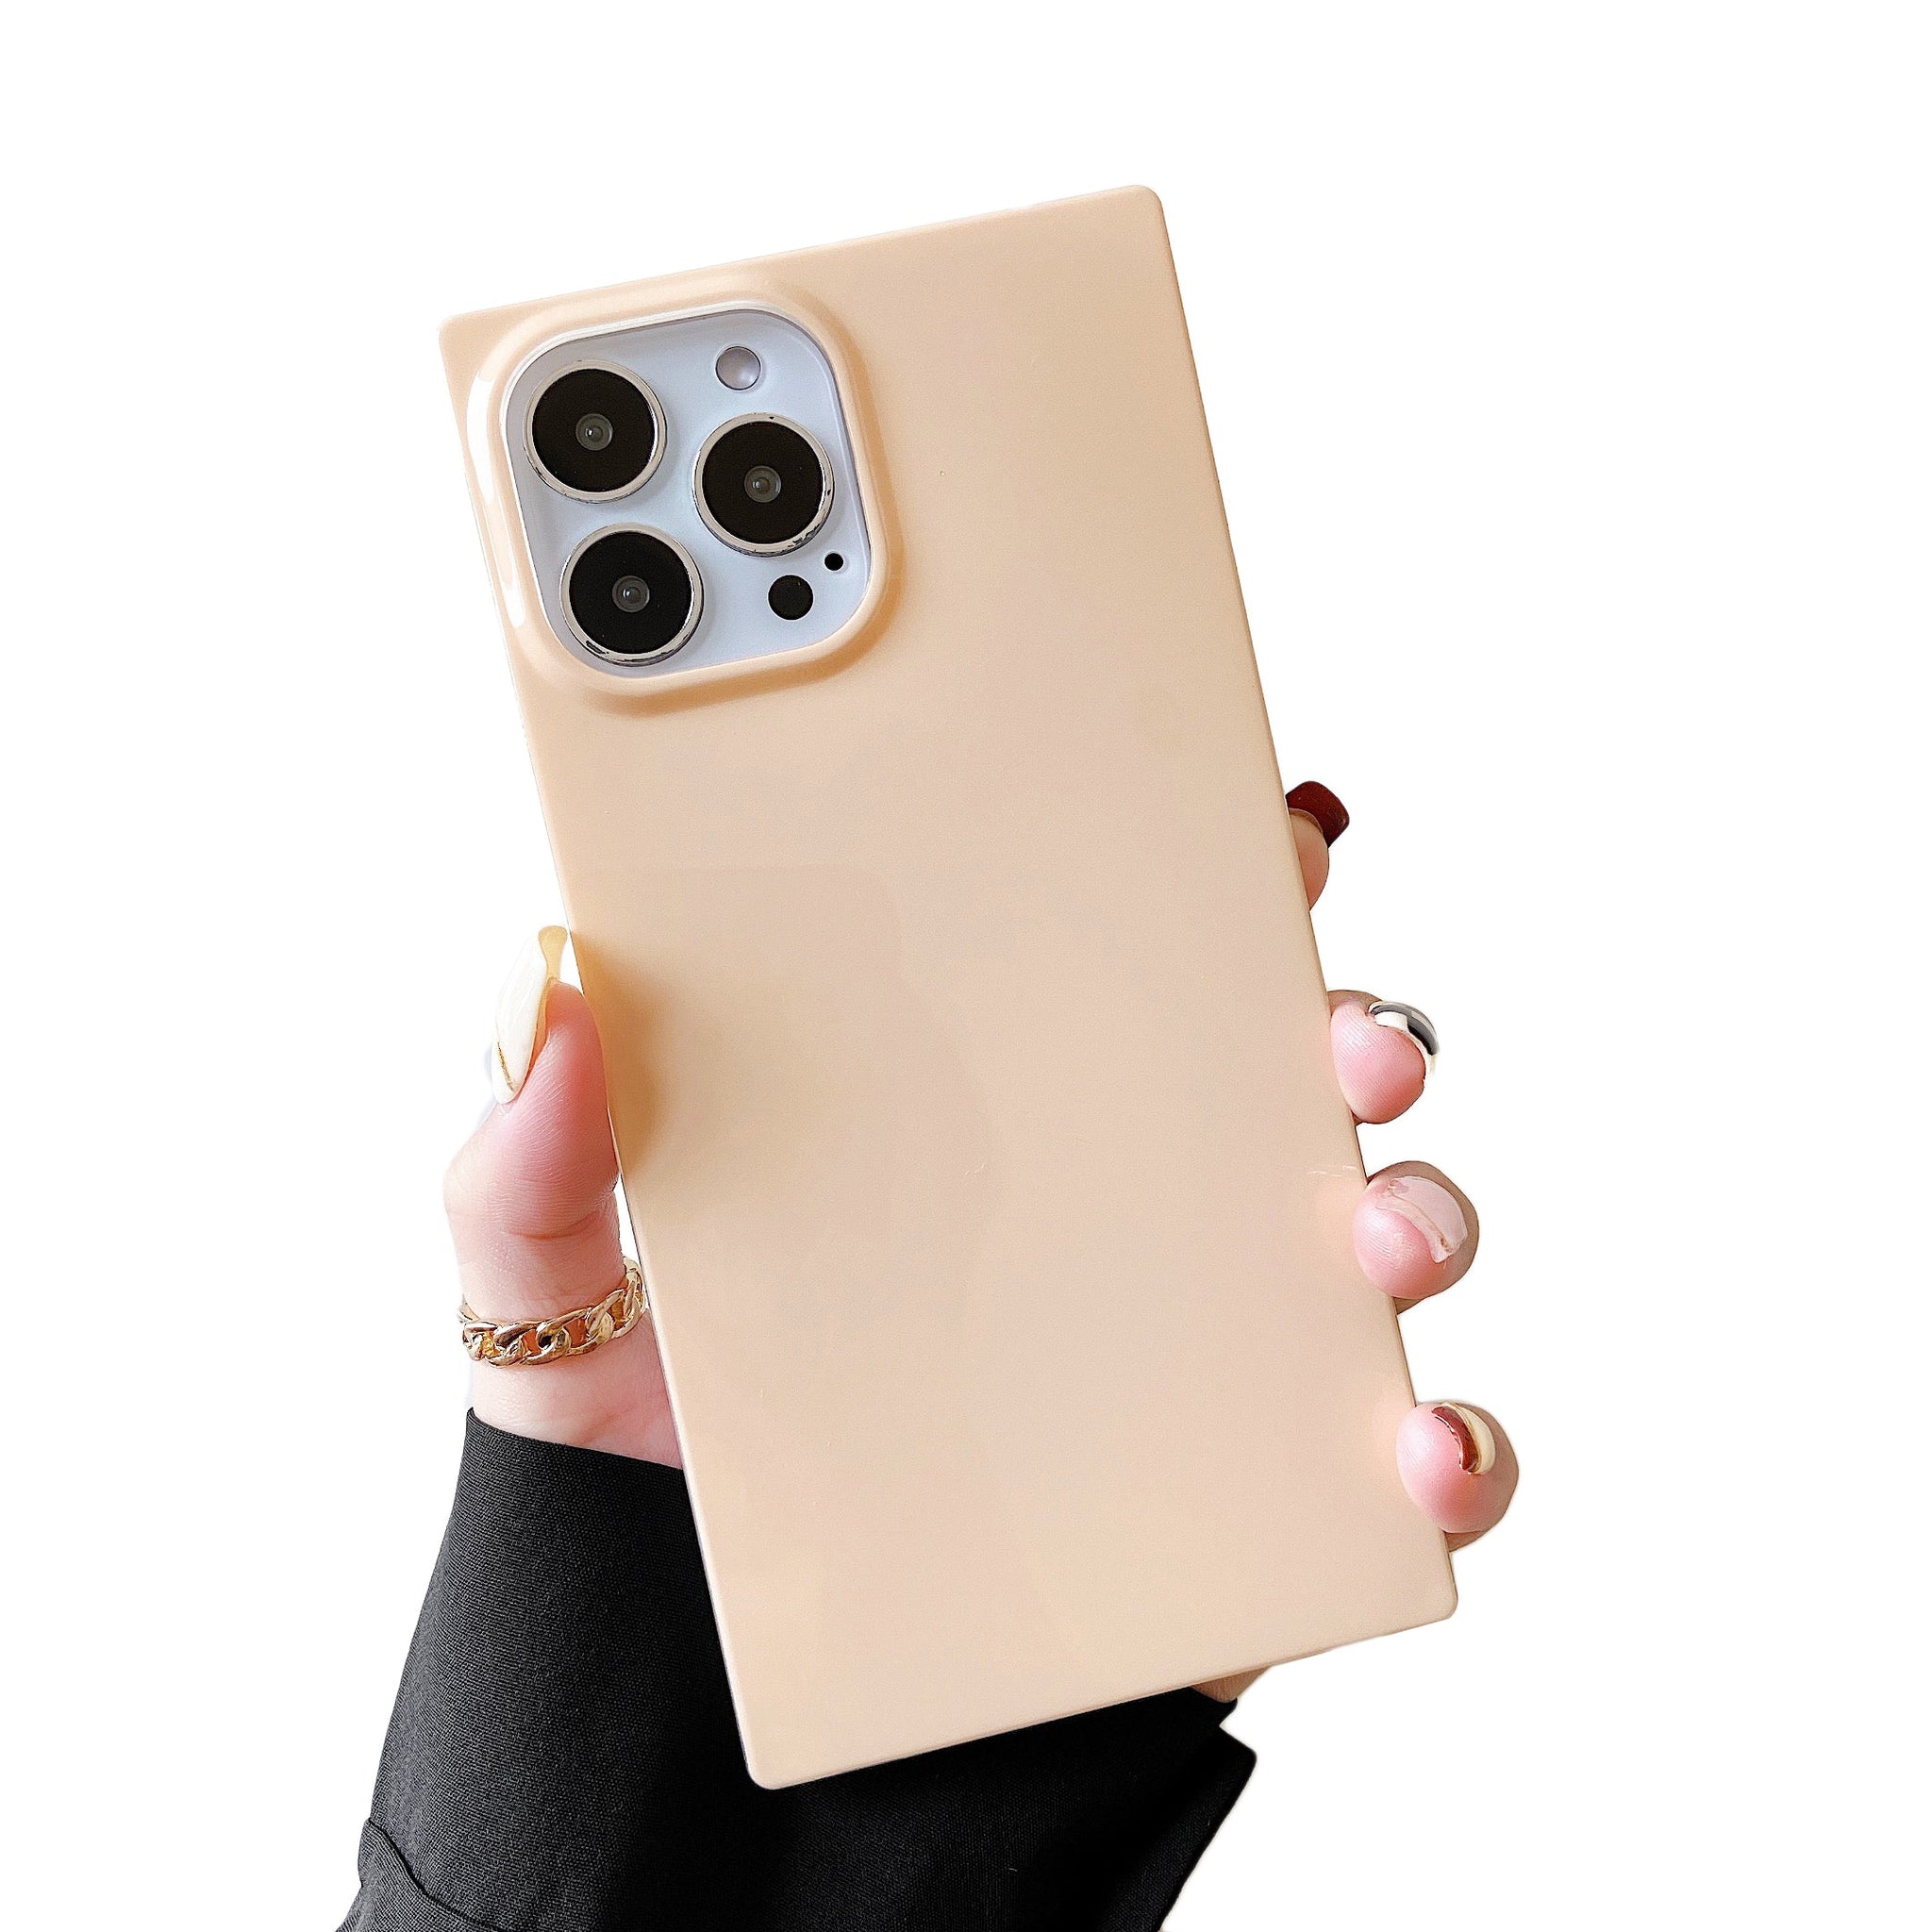 iPhone 11 Pro Max Case Square Neutral Plain Color (Nude)